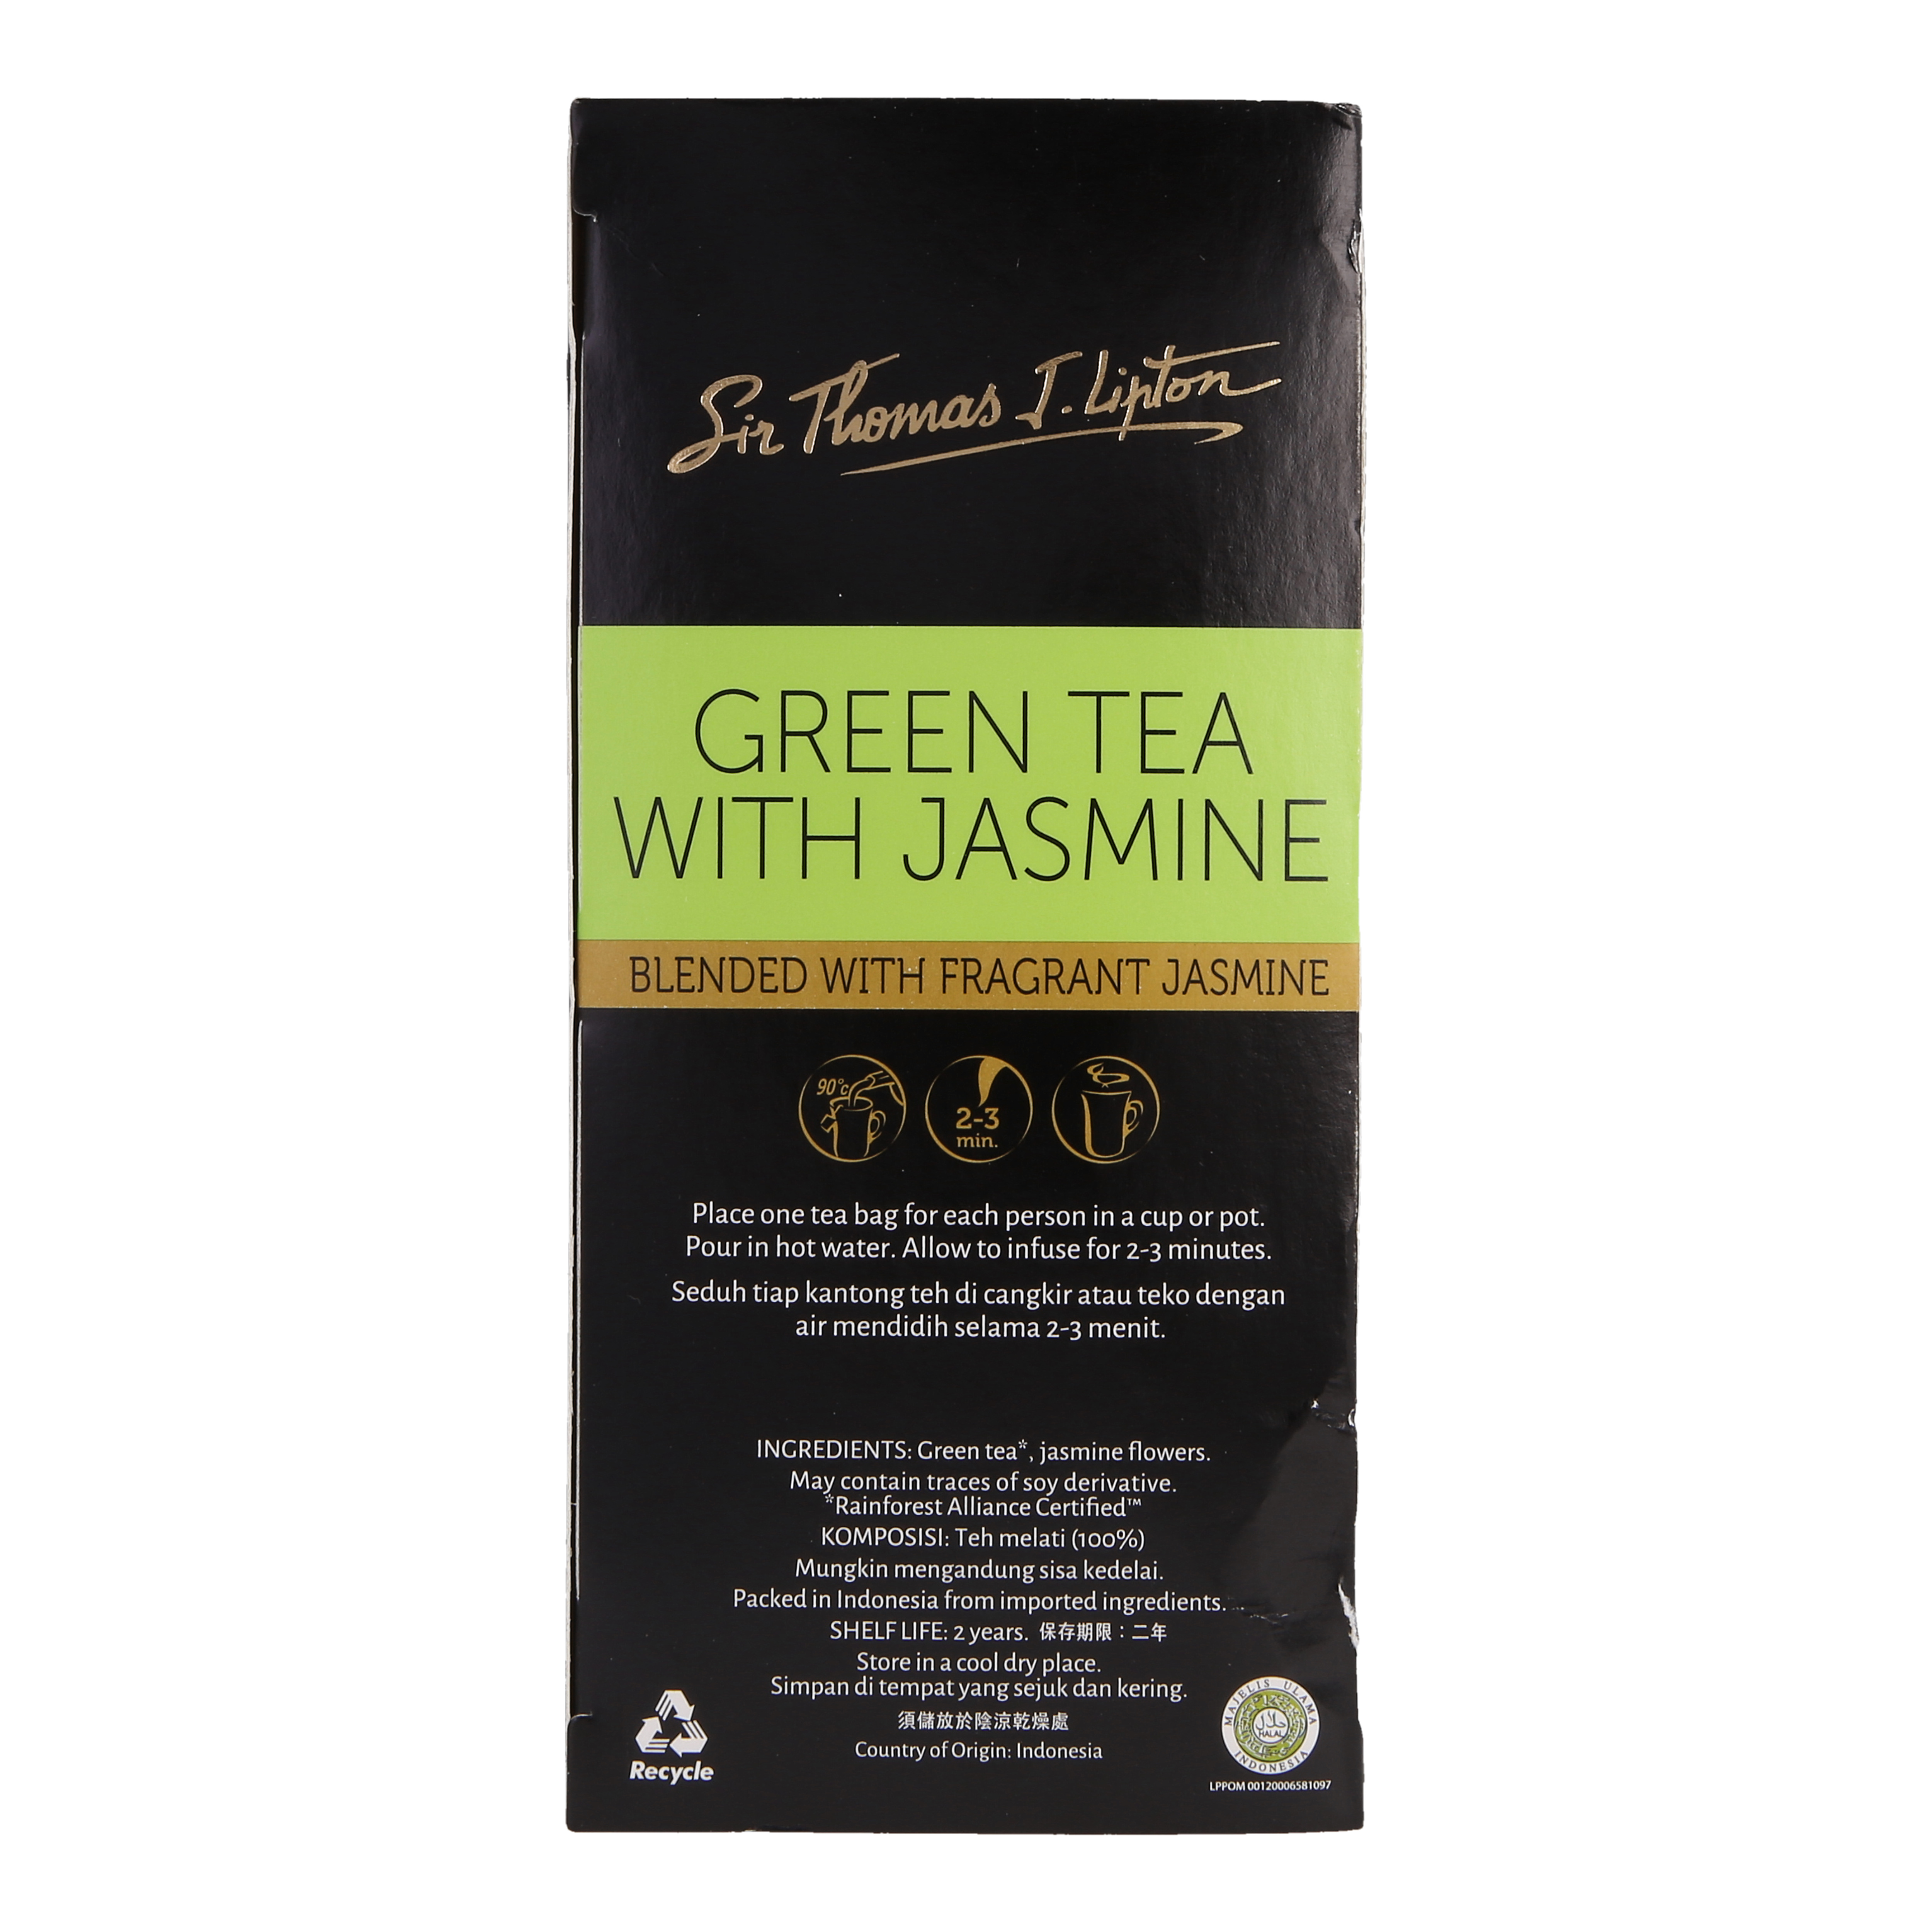 GREEN TEA WITH JASMINE ENV TEABAG 茉莉绿茶袋